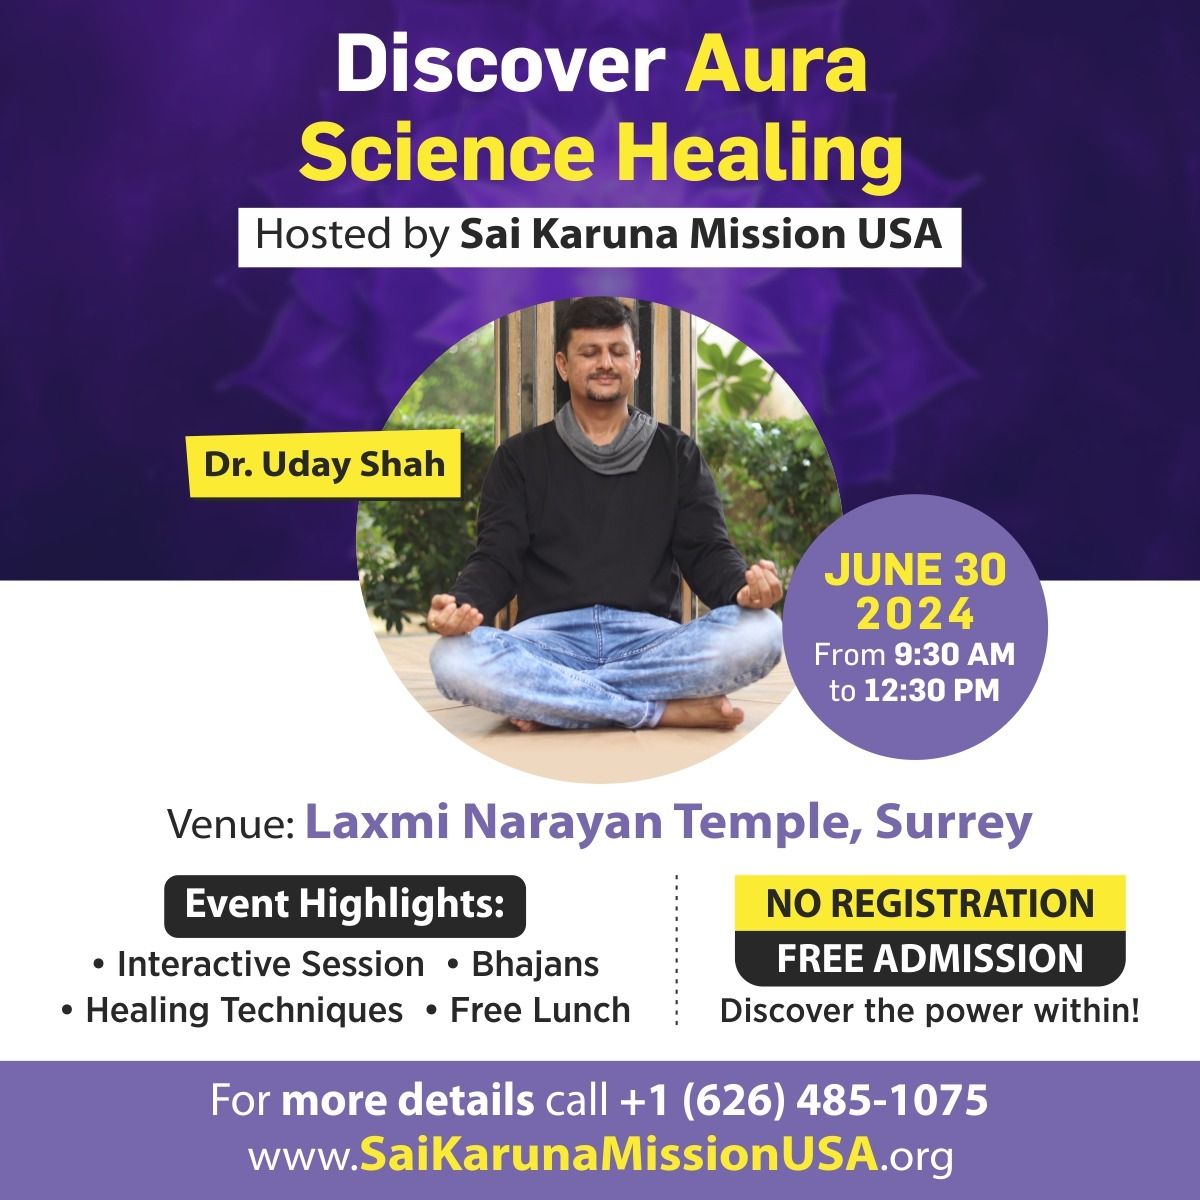 Healing through Aura Science Hosted by Sai Karuna Mission USA in Surrey